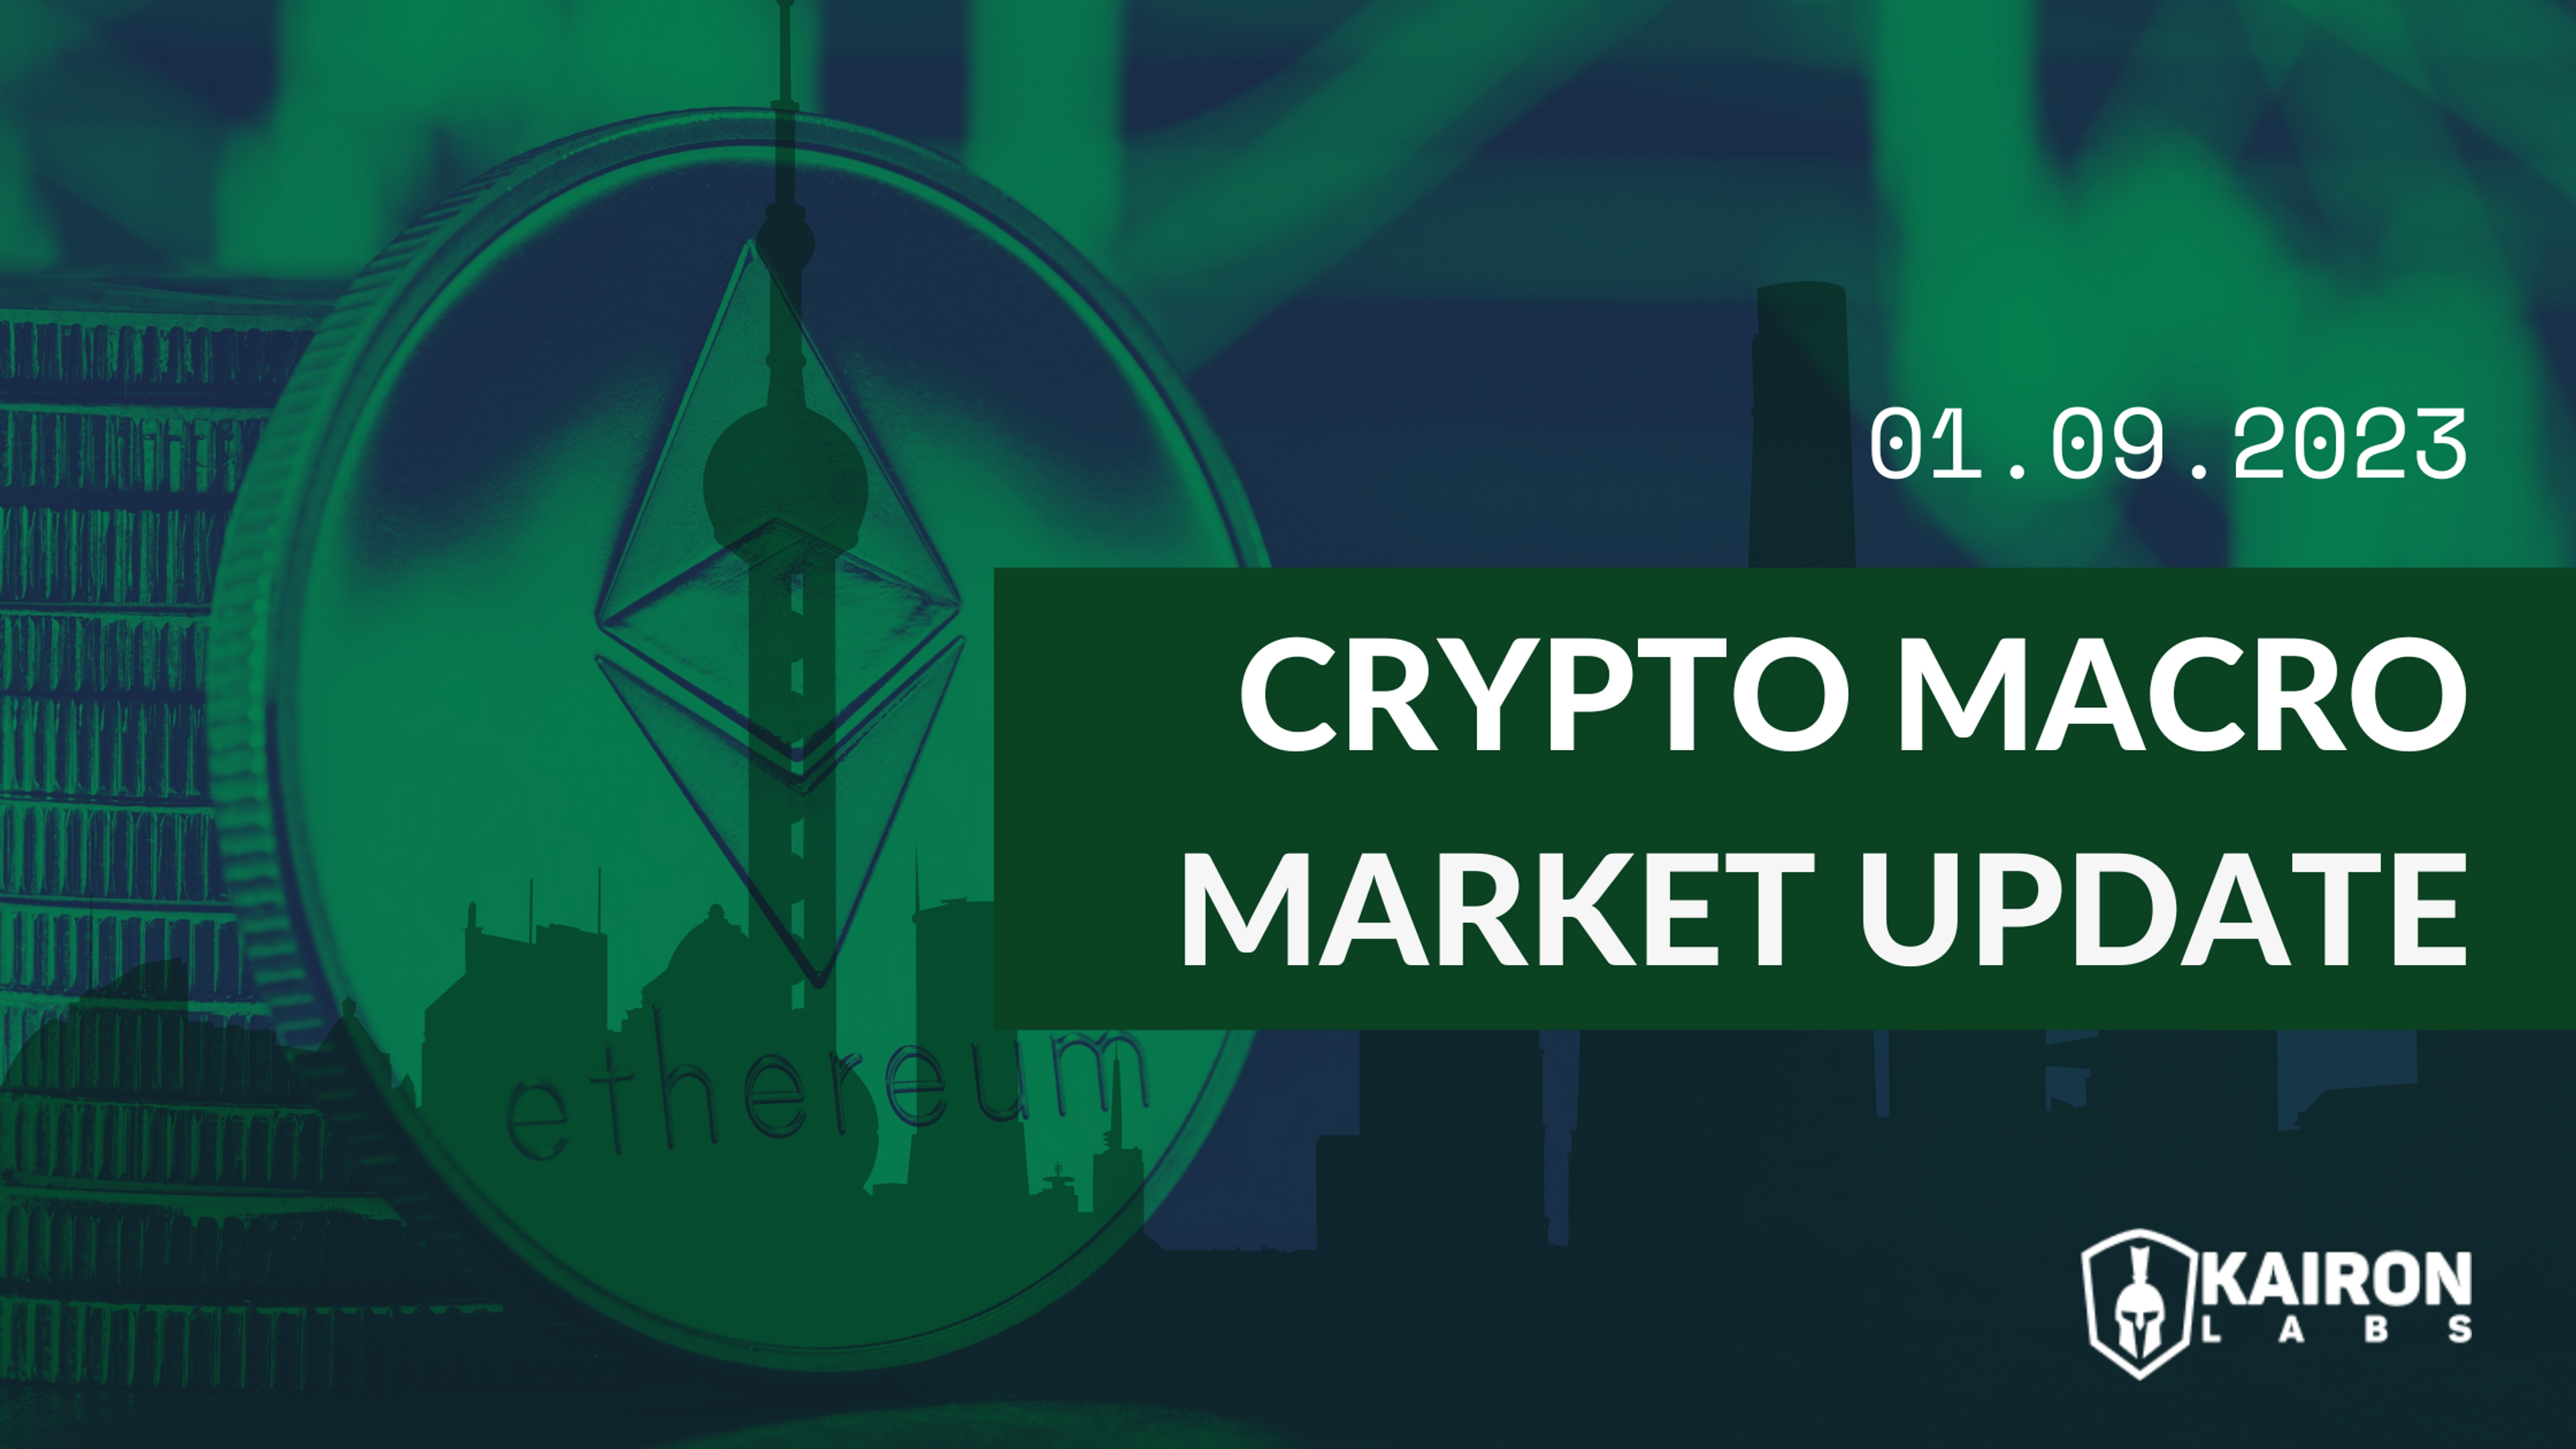 Crypto Macro Market update - January 9, 2023 - Karion Labs Market Making